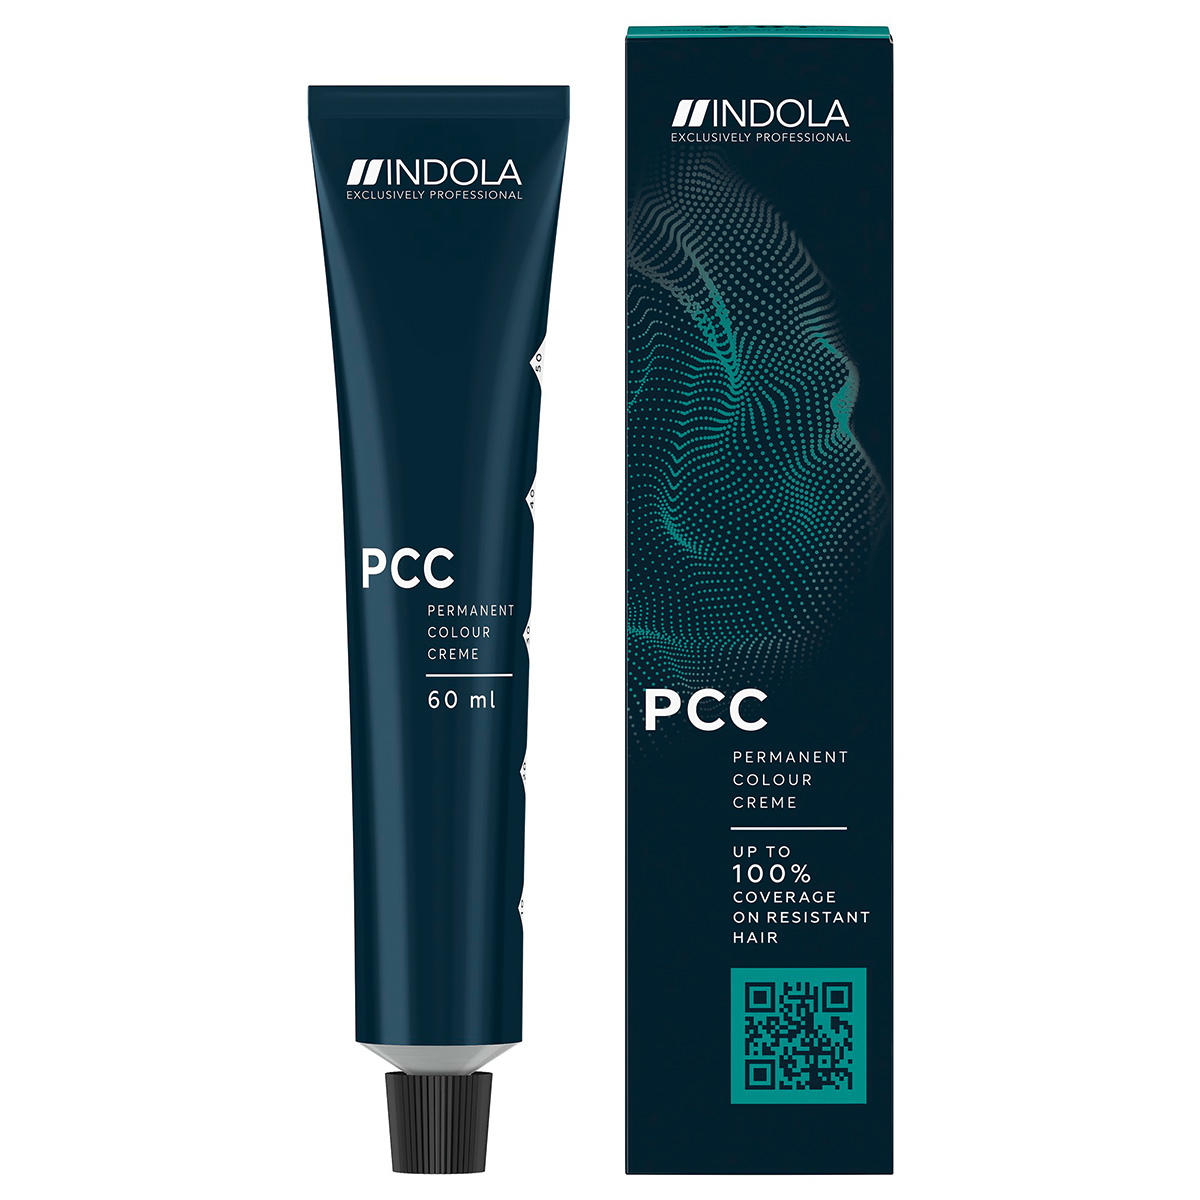 Indola PCC Permanent Colour Creme Intense Coverage 7.3+ blond moyen or naturel 60 ml - 3